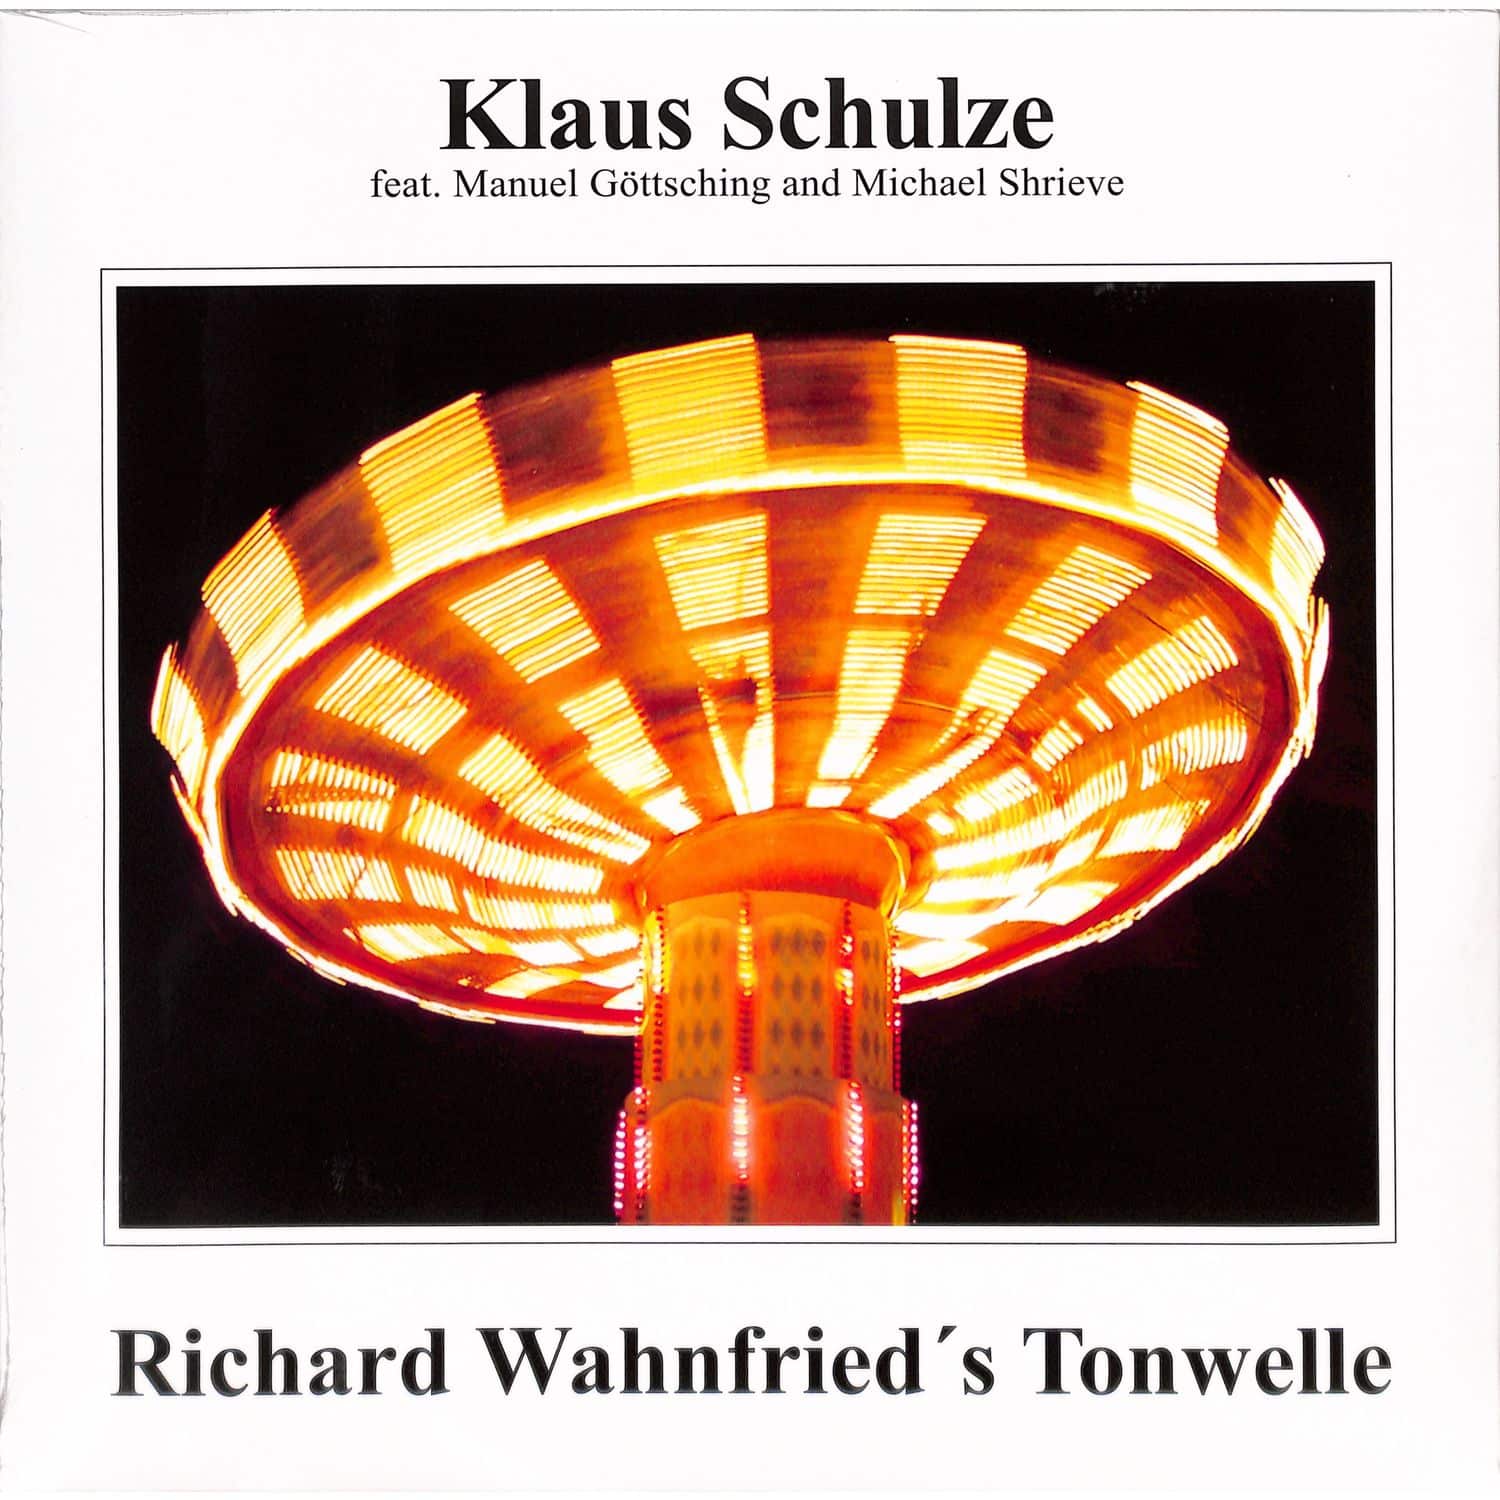 Klaus Schulze - RICHARD WAHNFRIEDS TONWELLE 